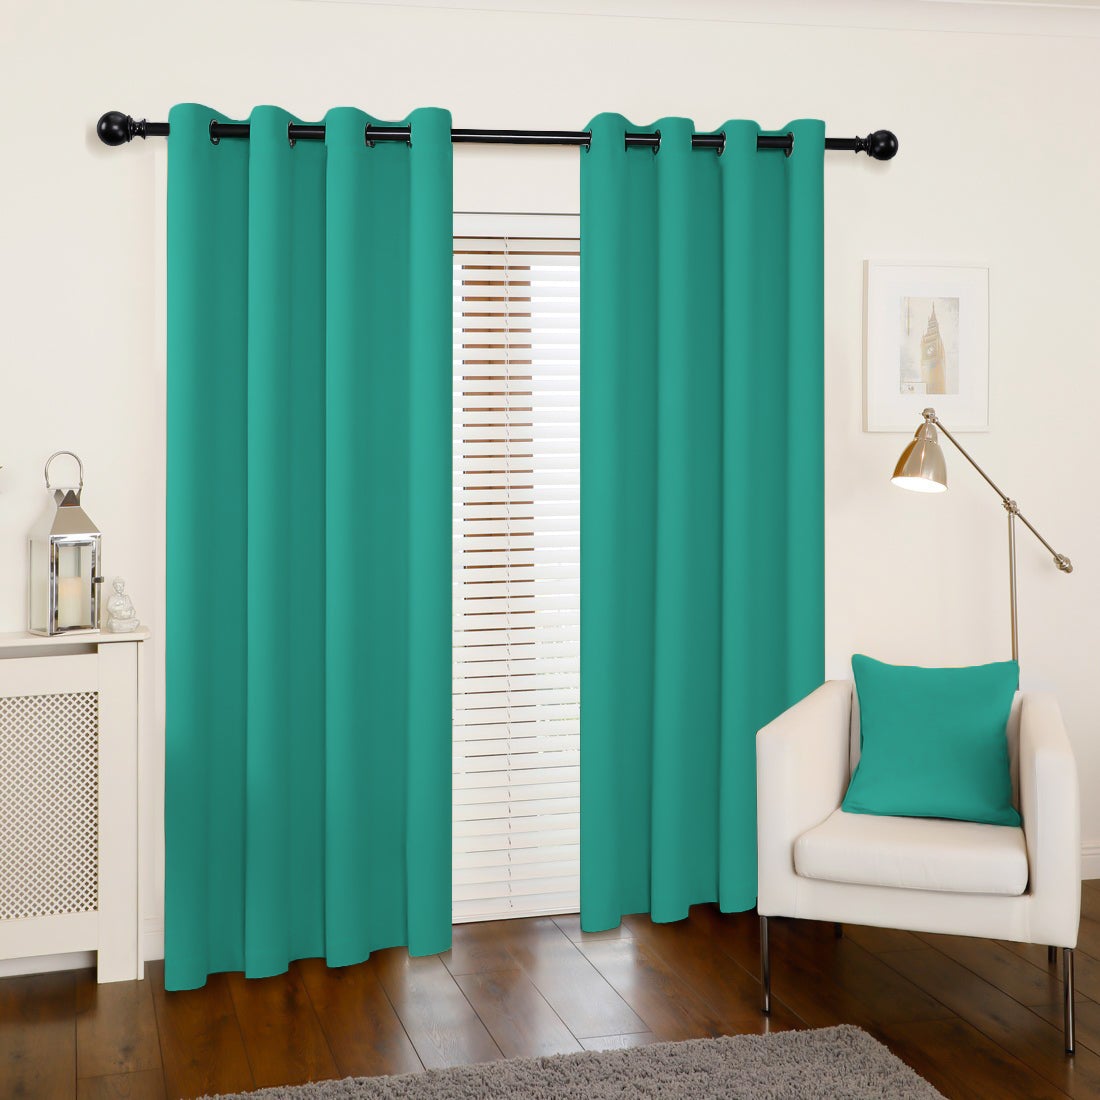 Akarise Blackout Curtains for Bedroom Living Room - 2 Panels,Teal